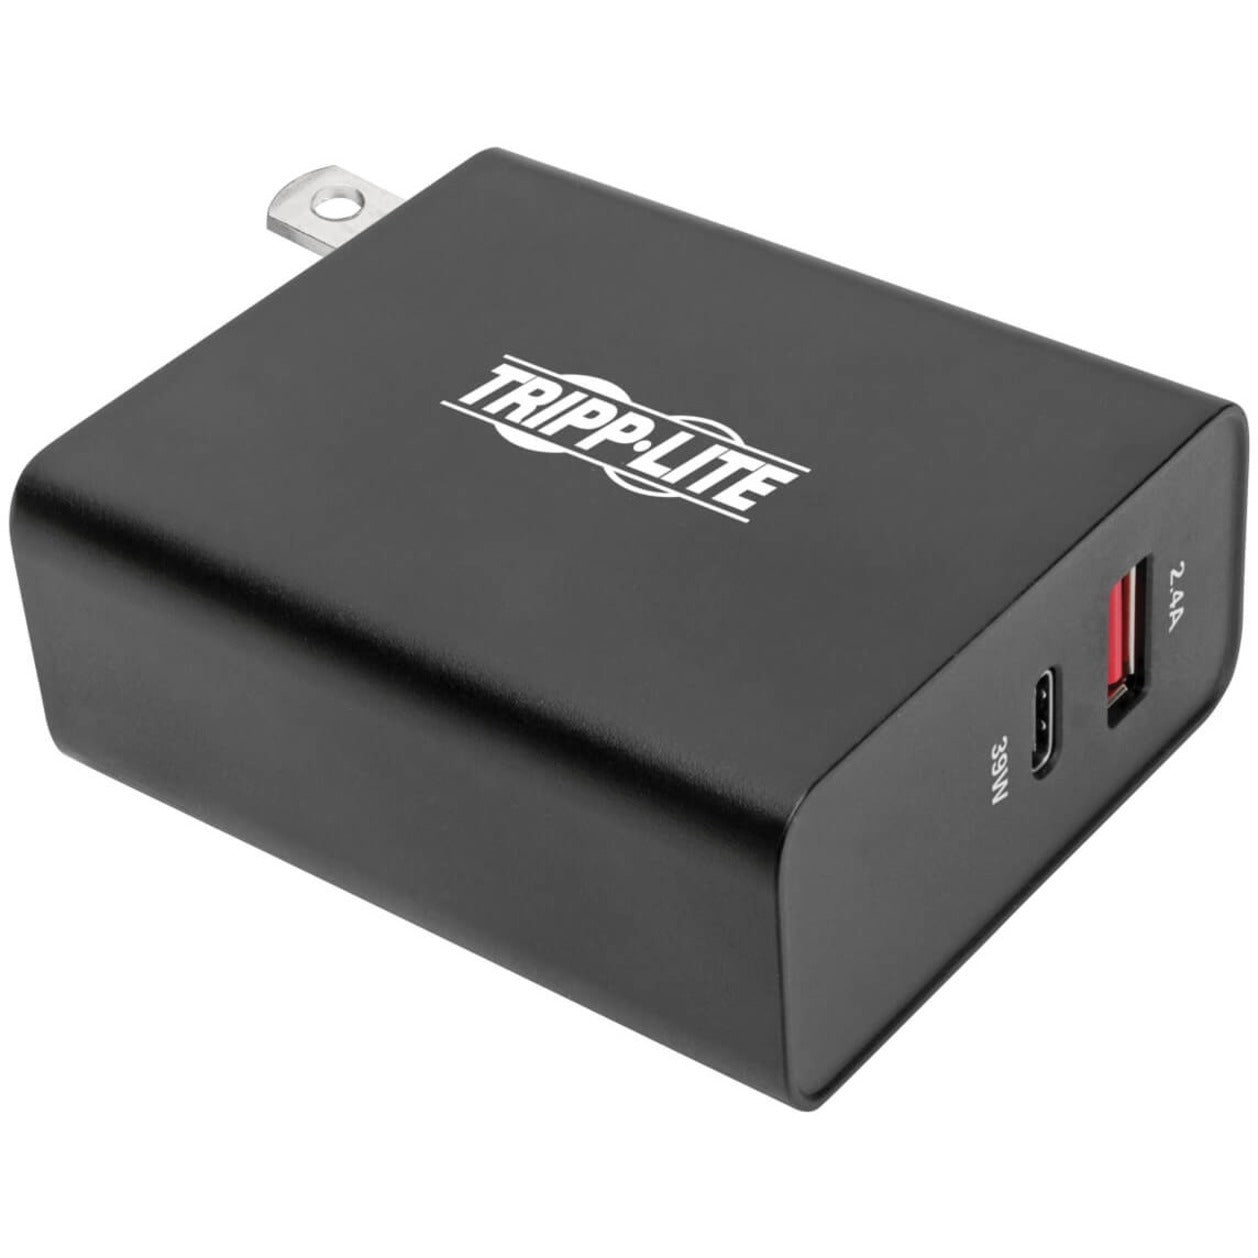 Tripp Lite U280-W02-A1C1 AC Adapter, 2PT USB Wall Charger with USB Type C, 51W Power, 2 Year Warranty